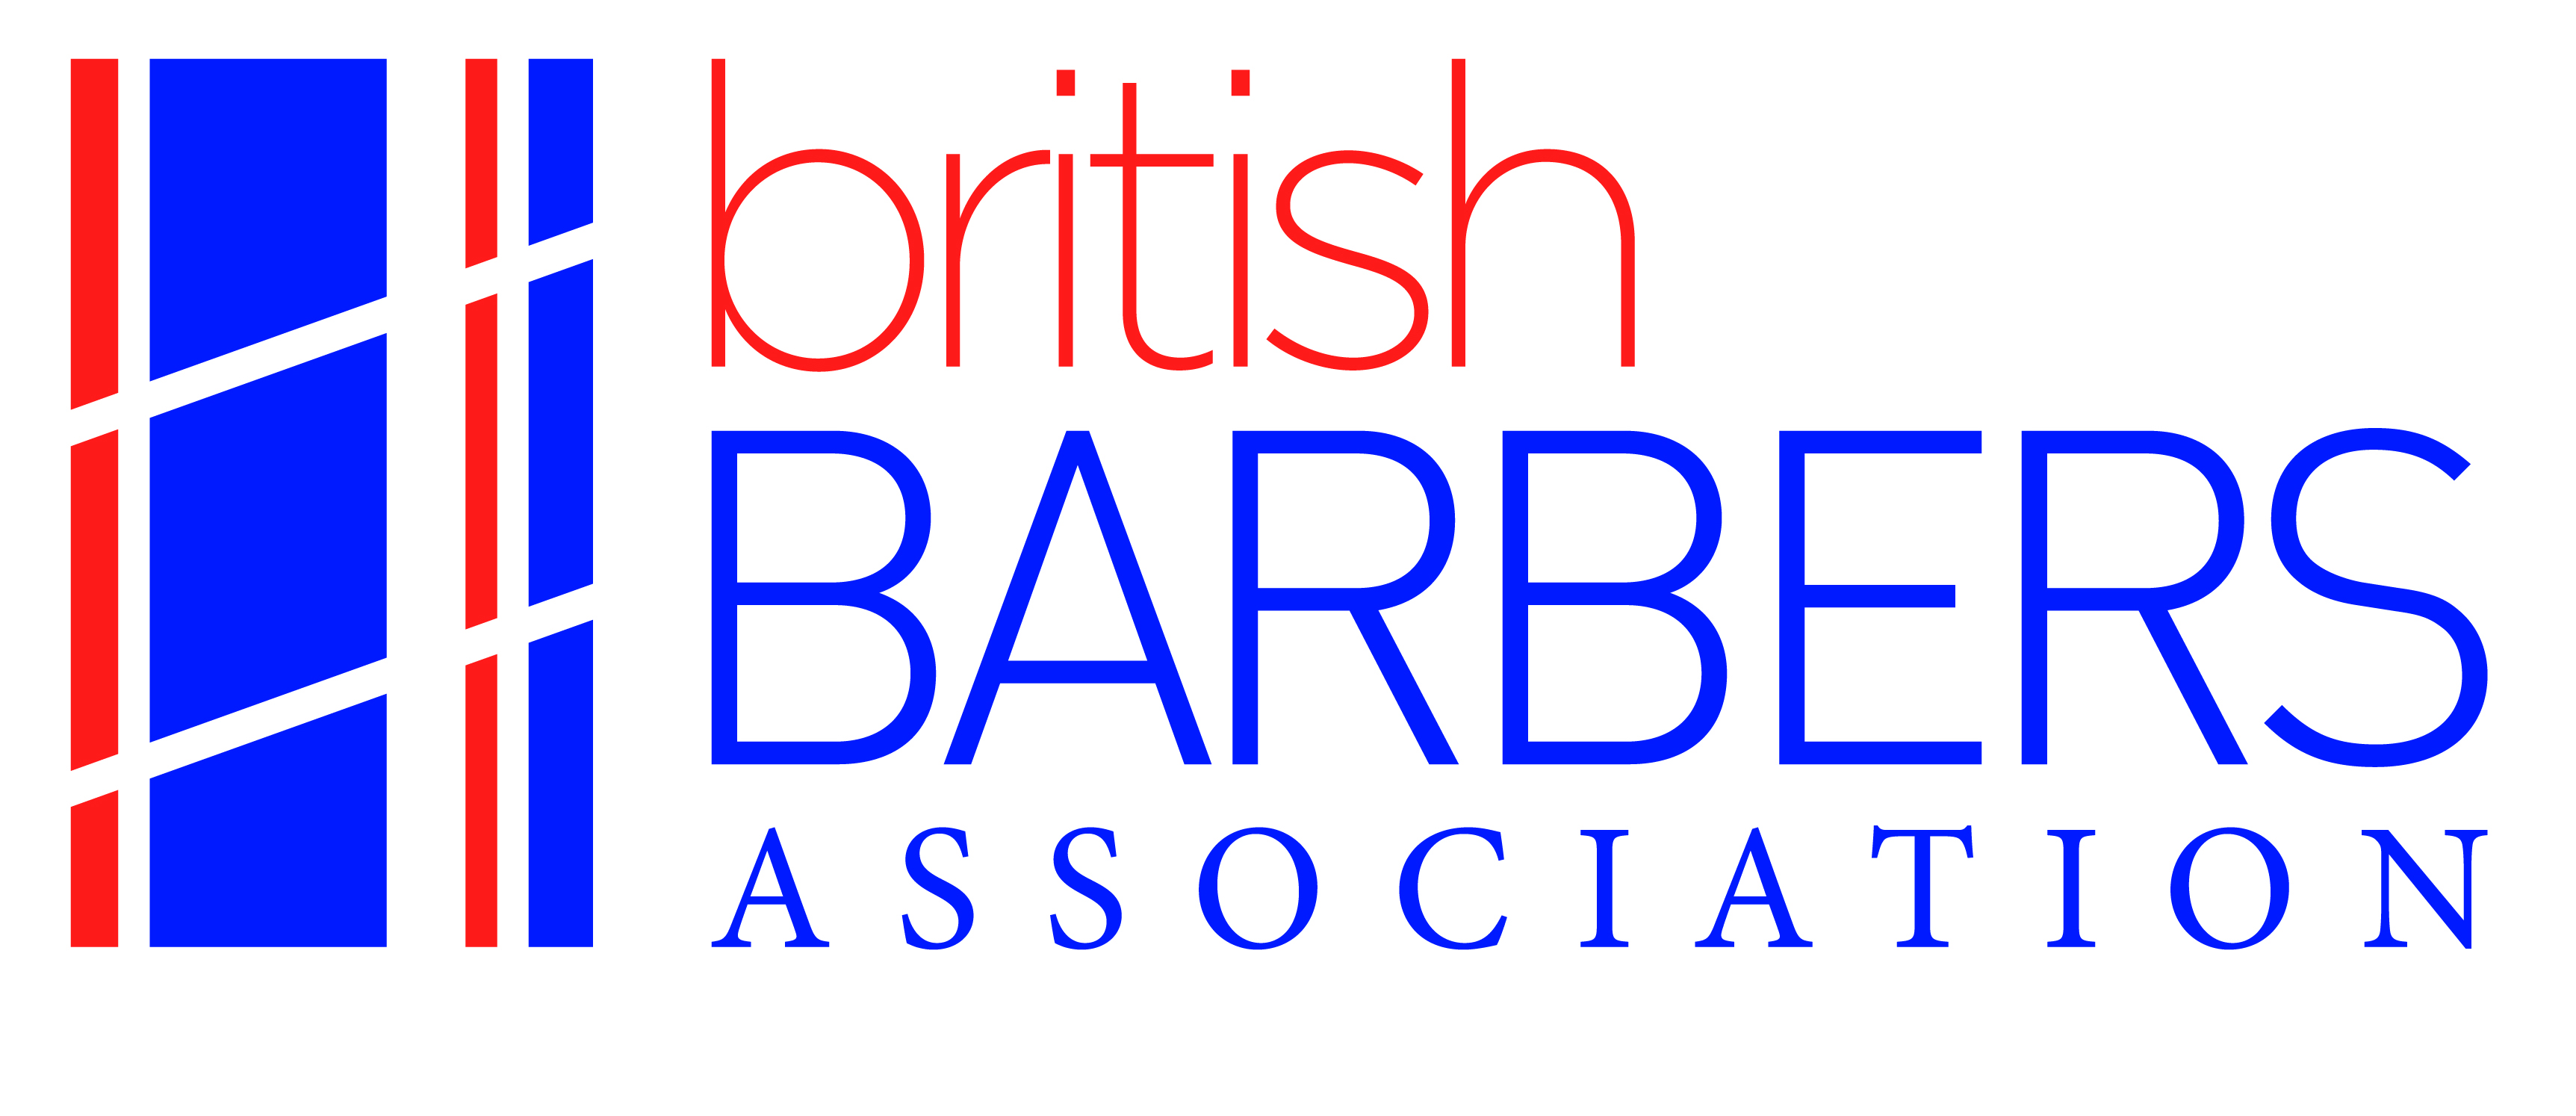 British Barbers Association logo